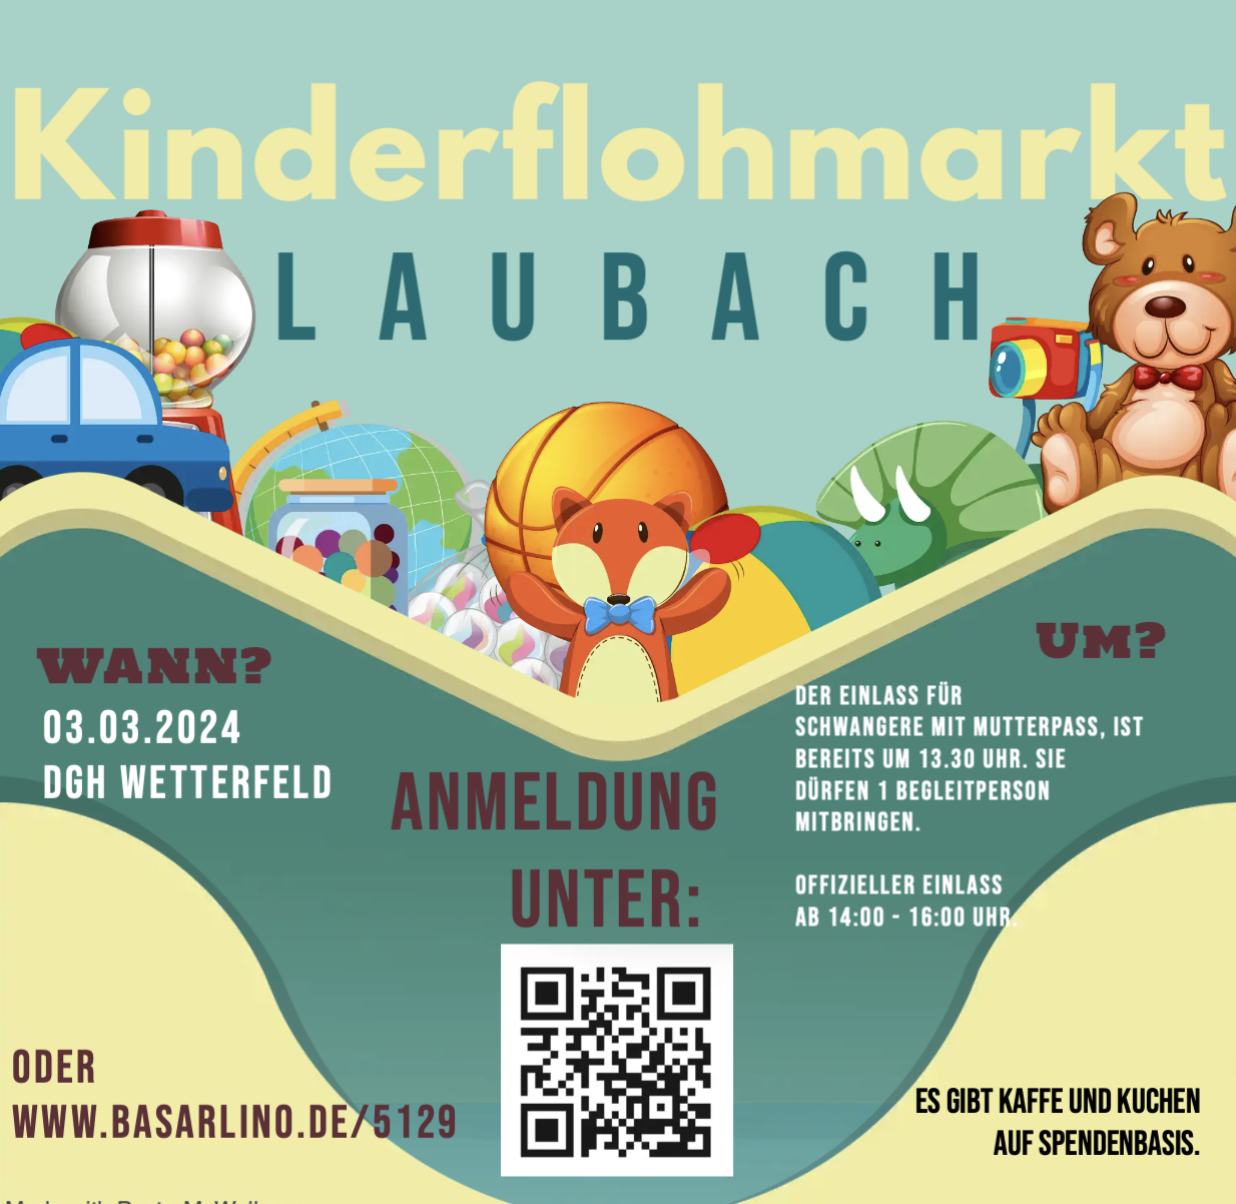 Kinderflohmarkt in Laubach-Wetterfeld